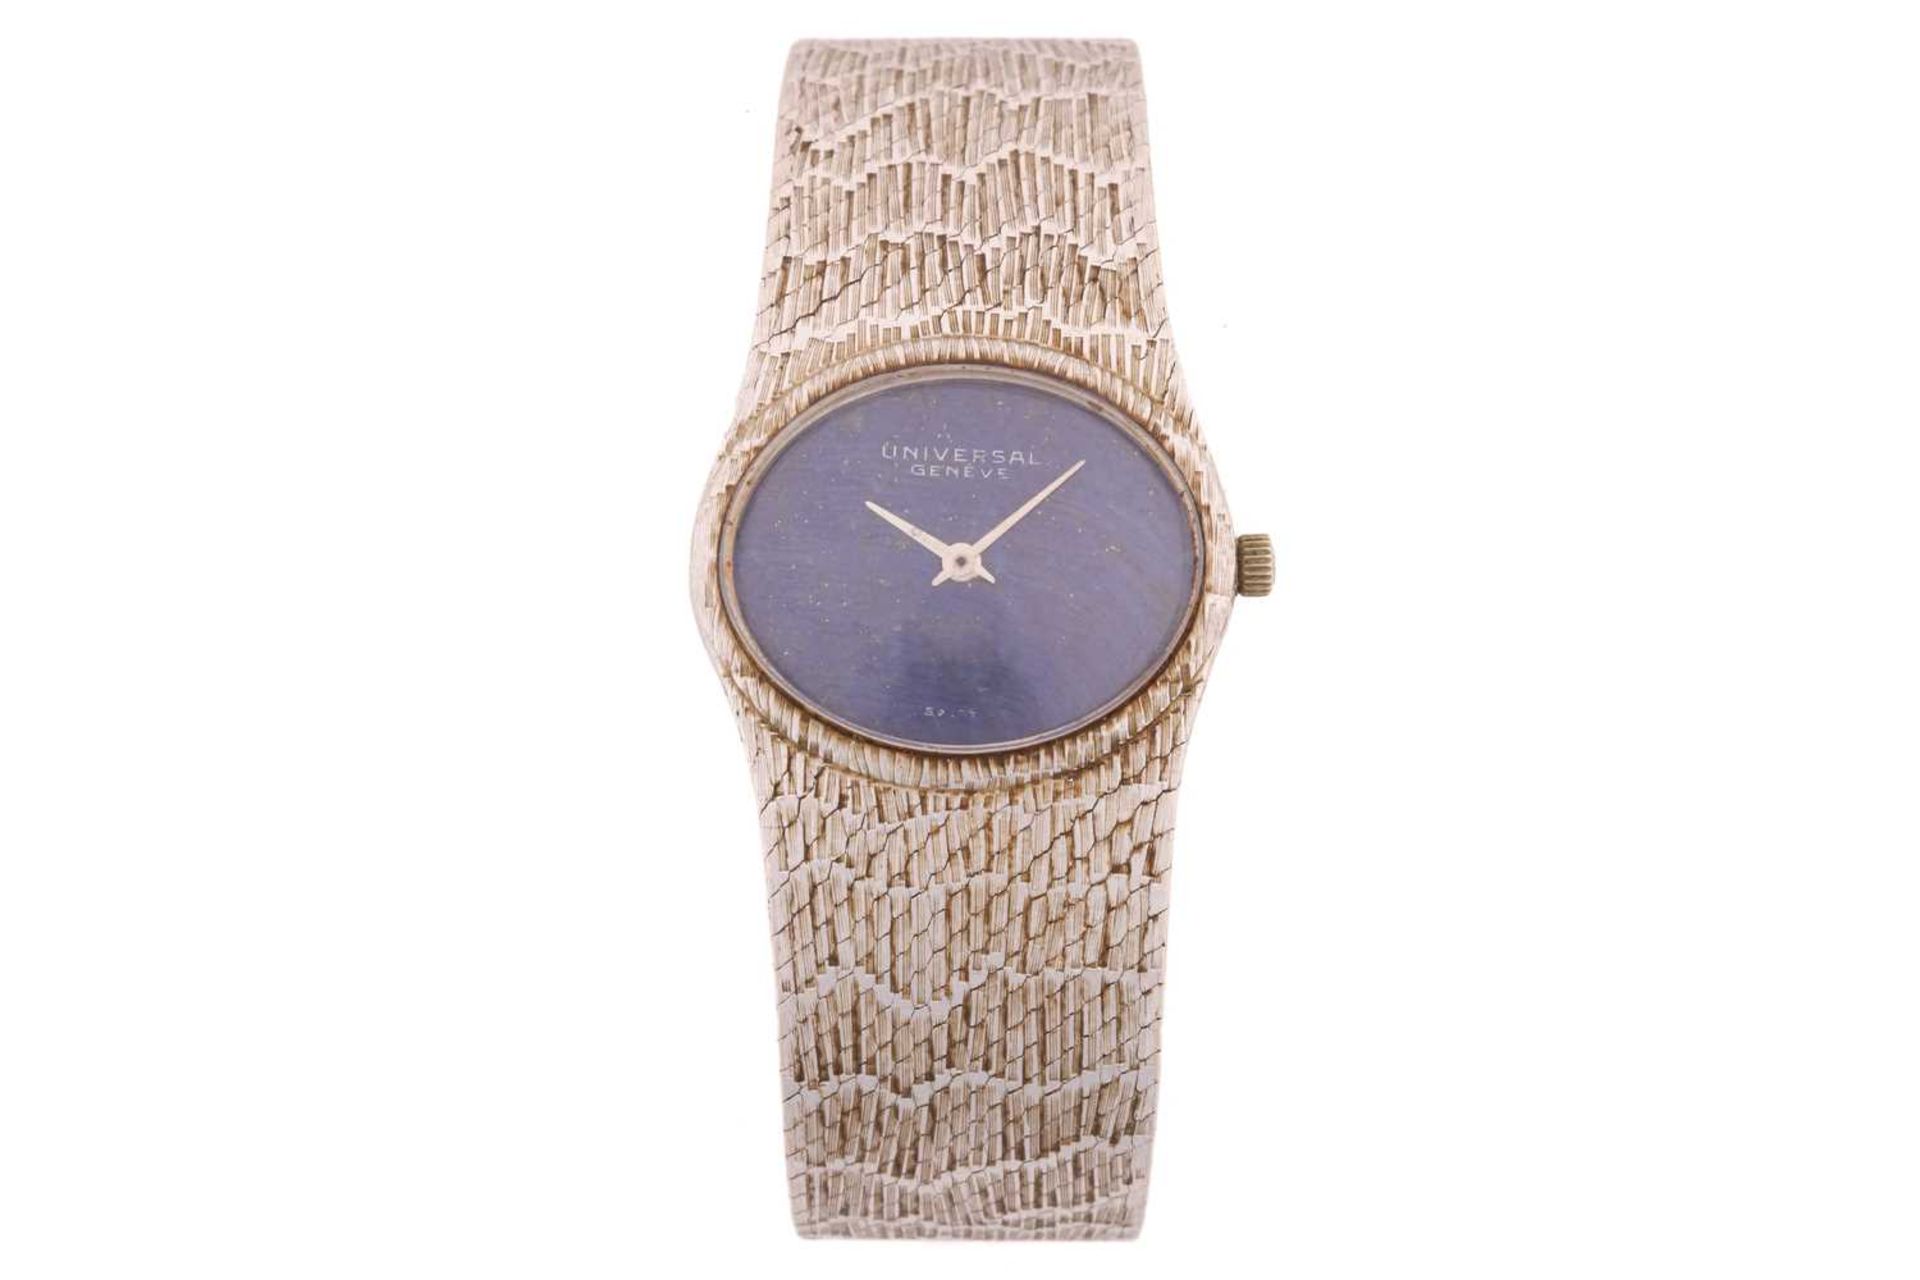 A Universal Geneve lapis lazuli dial dress watch, featuring a Swiss-made quartz movement in a